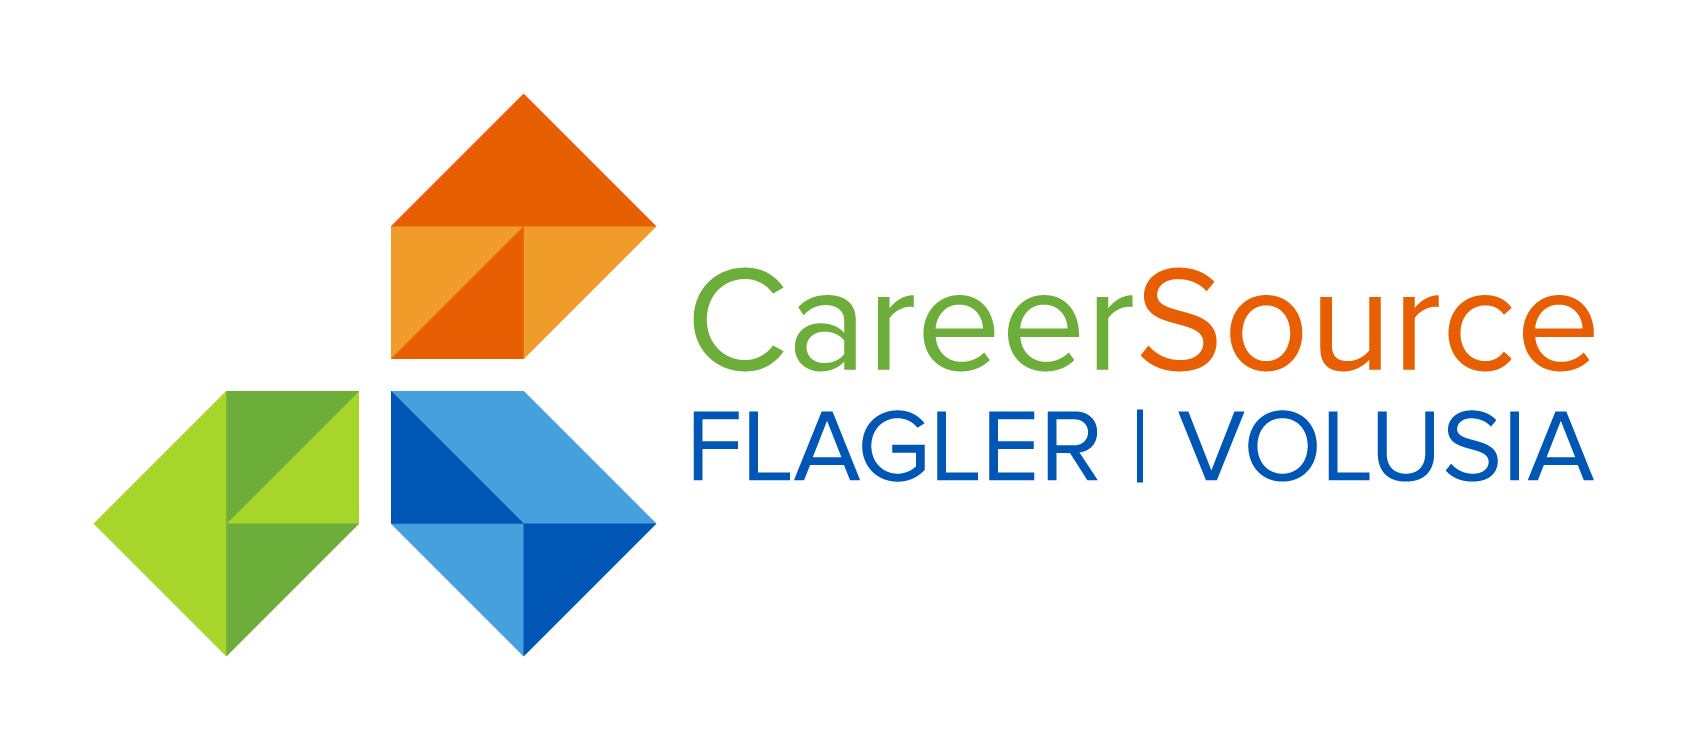 CareerSource Flagler Volusia logo